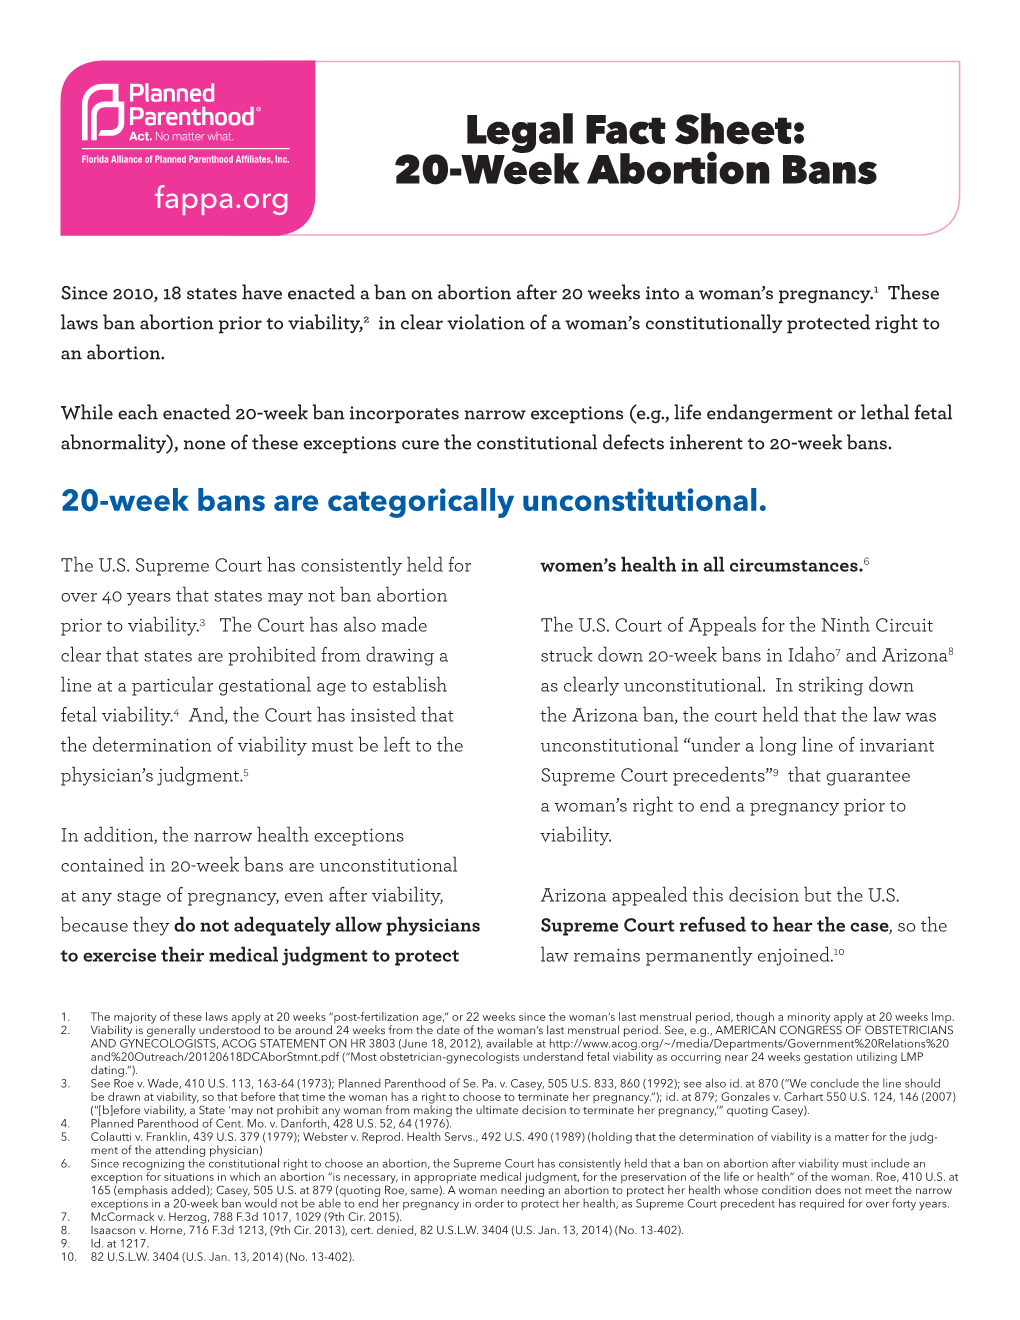 20-Week Ban Legal Issues Fact Sheet